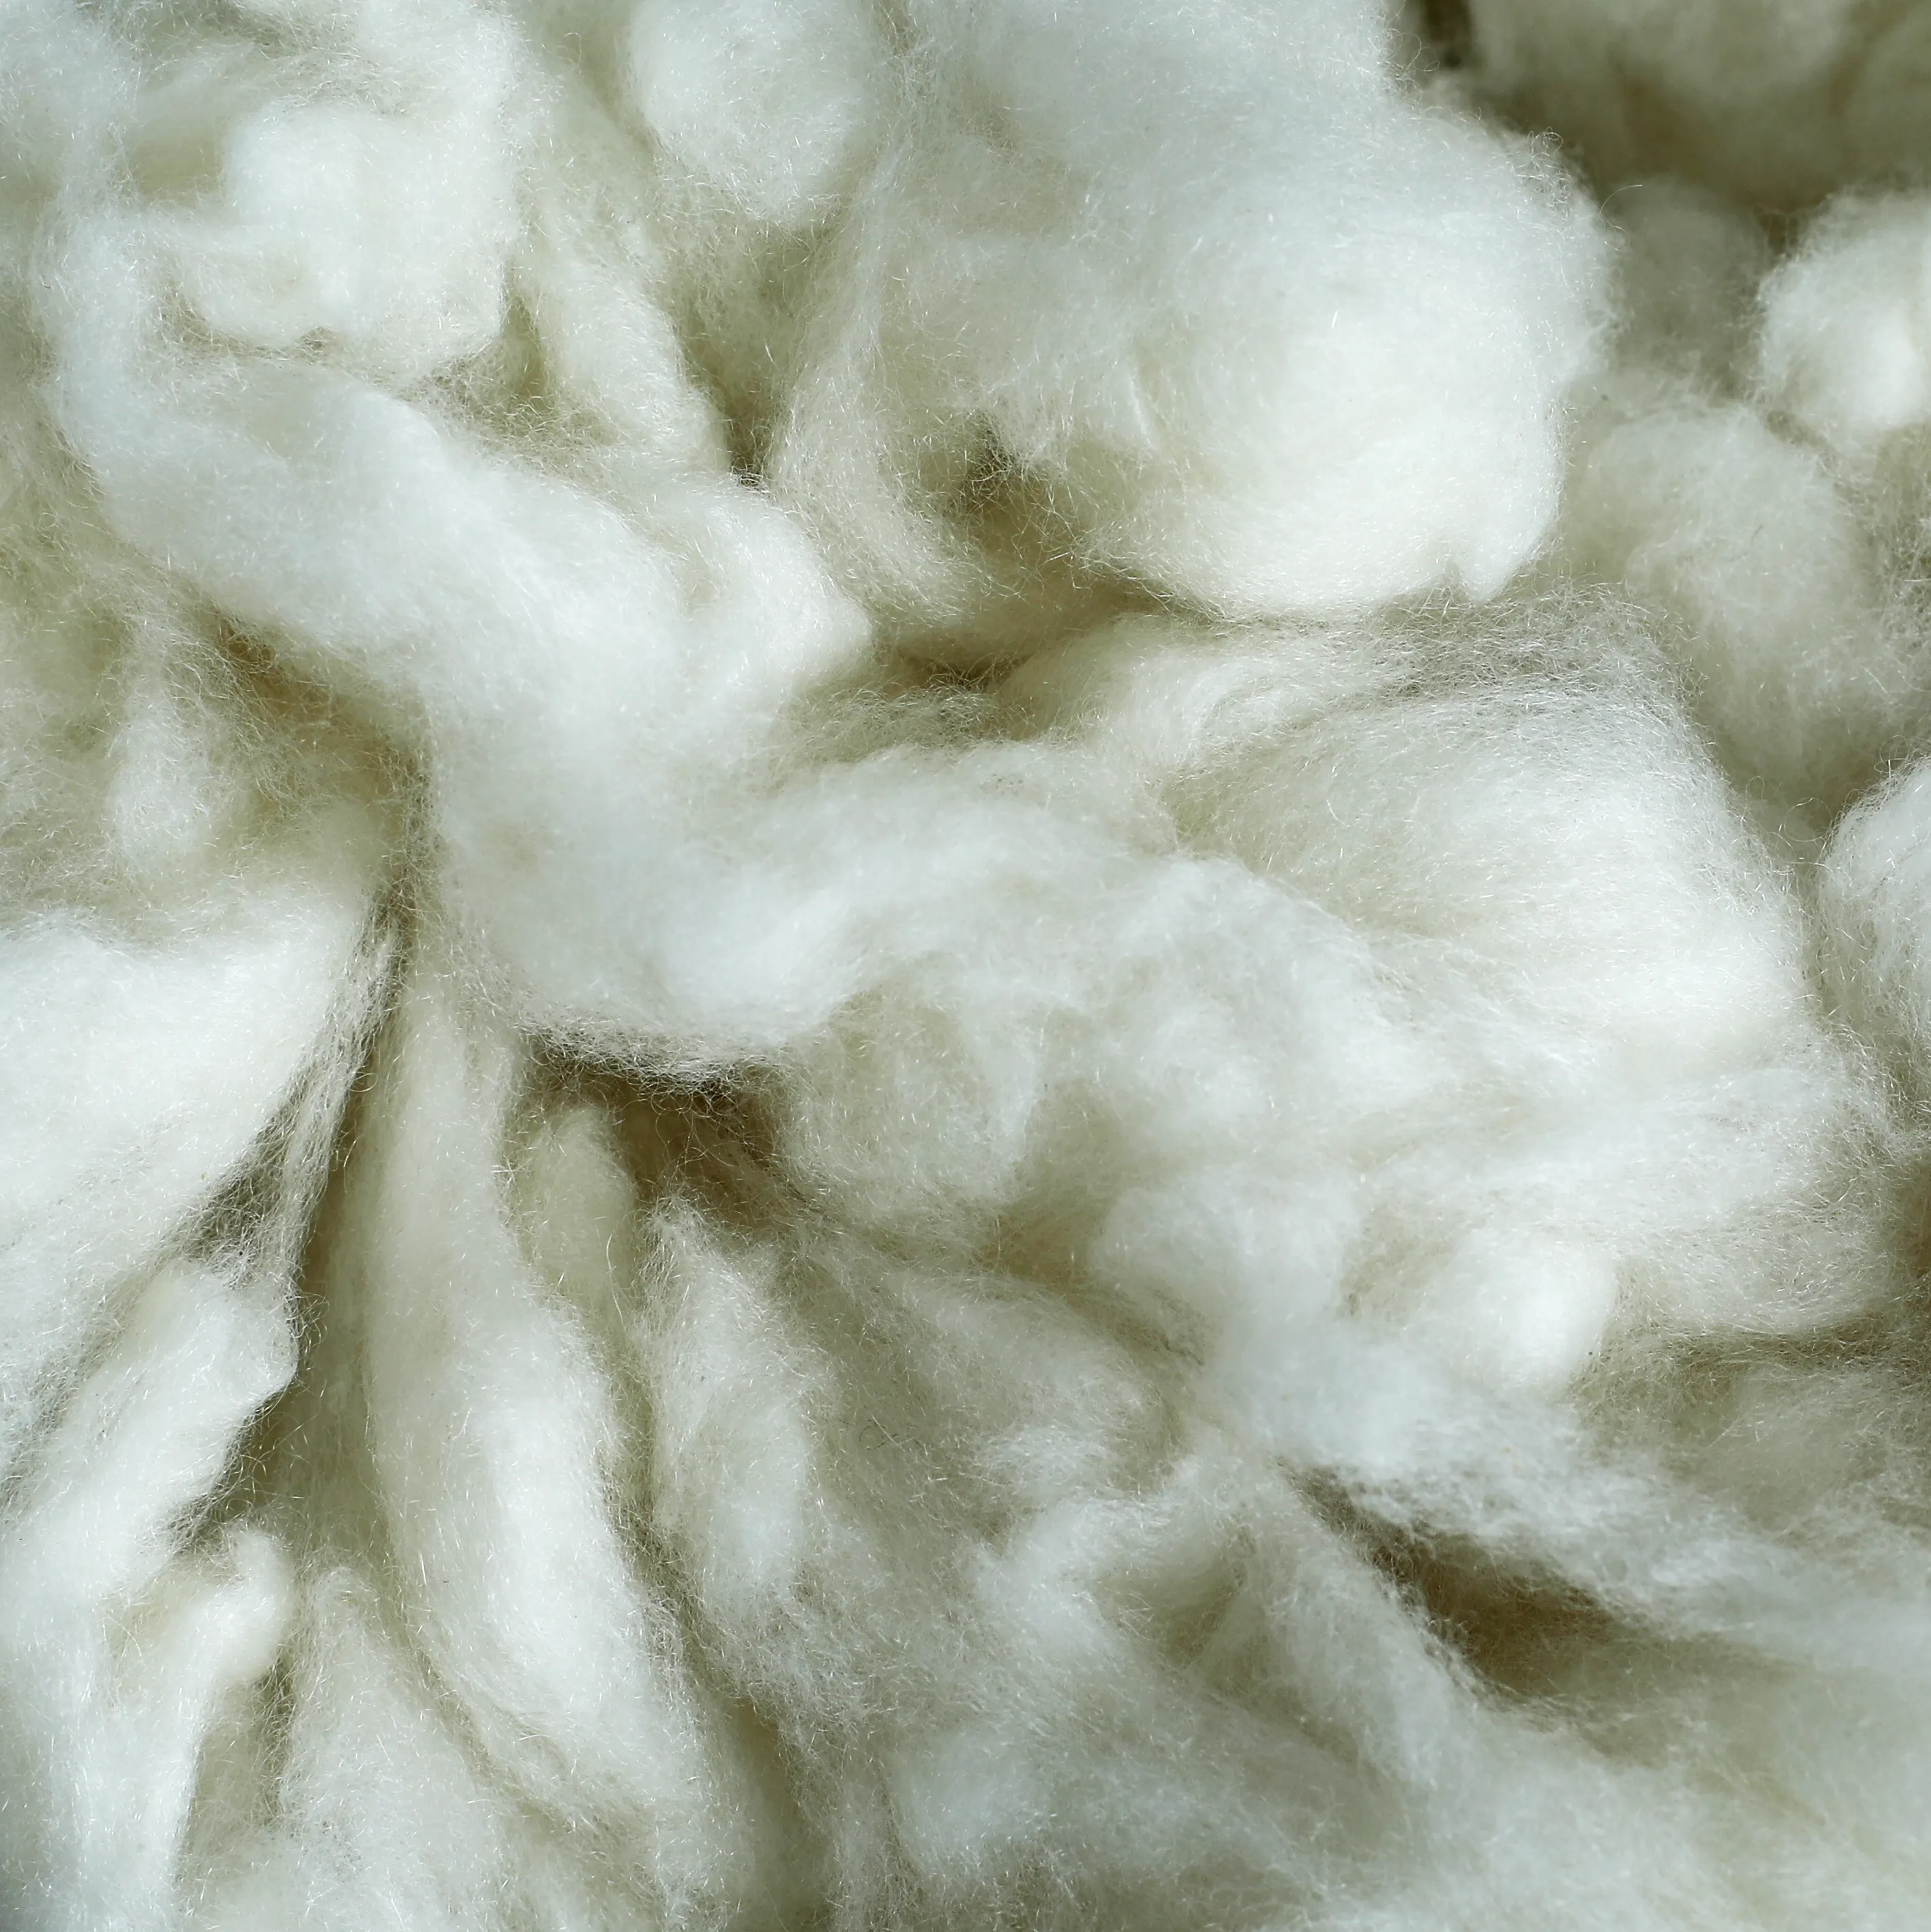 Cheap dehaired natural white cashmere fiber